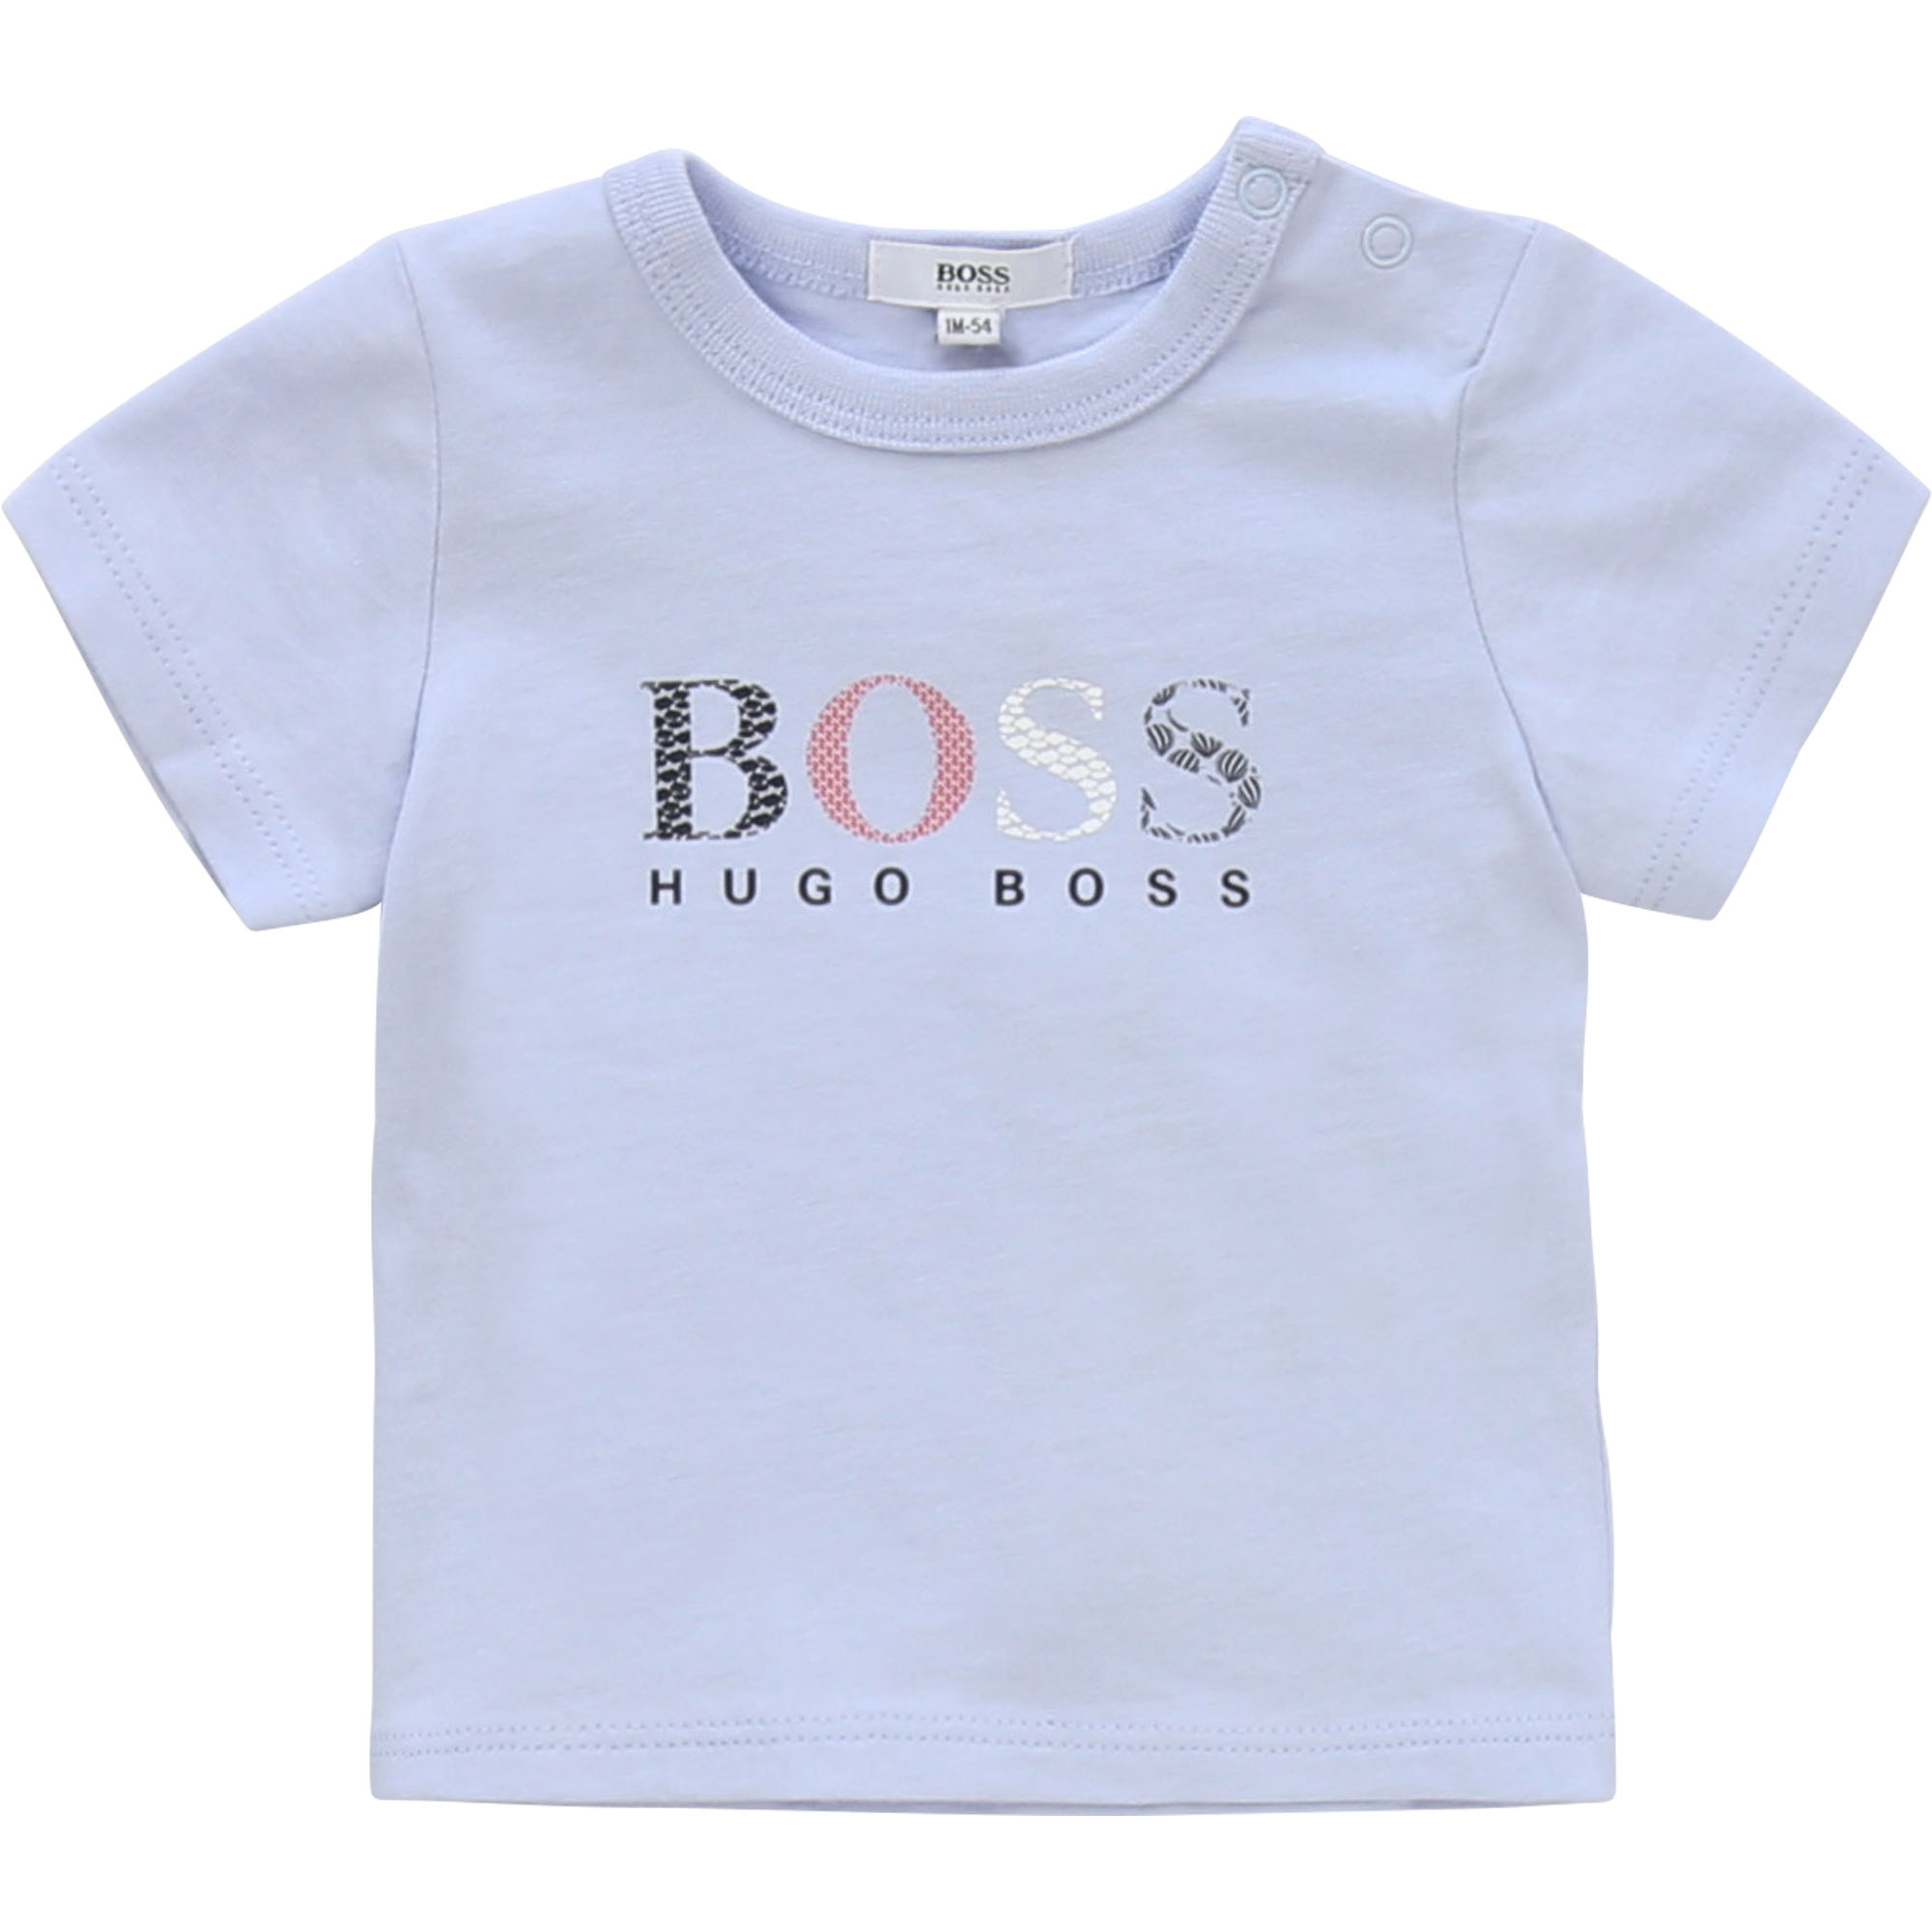 hugo boss newborn baby clothes